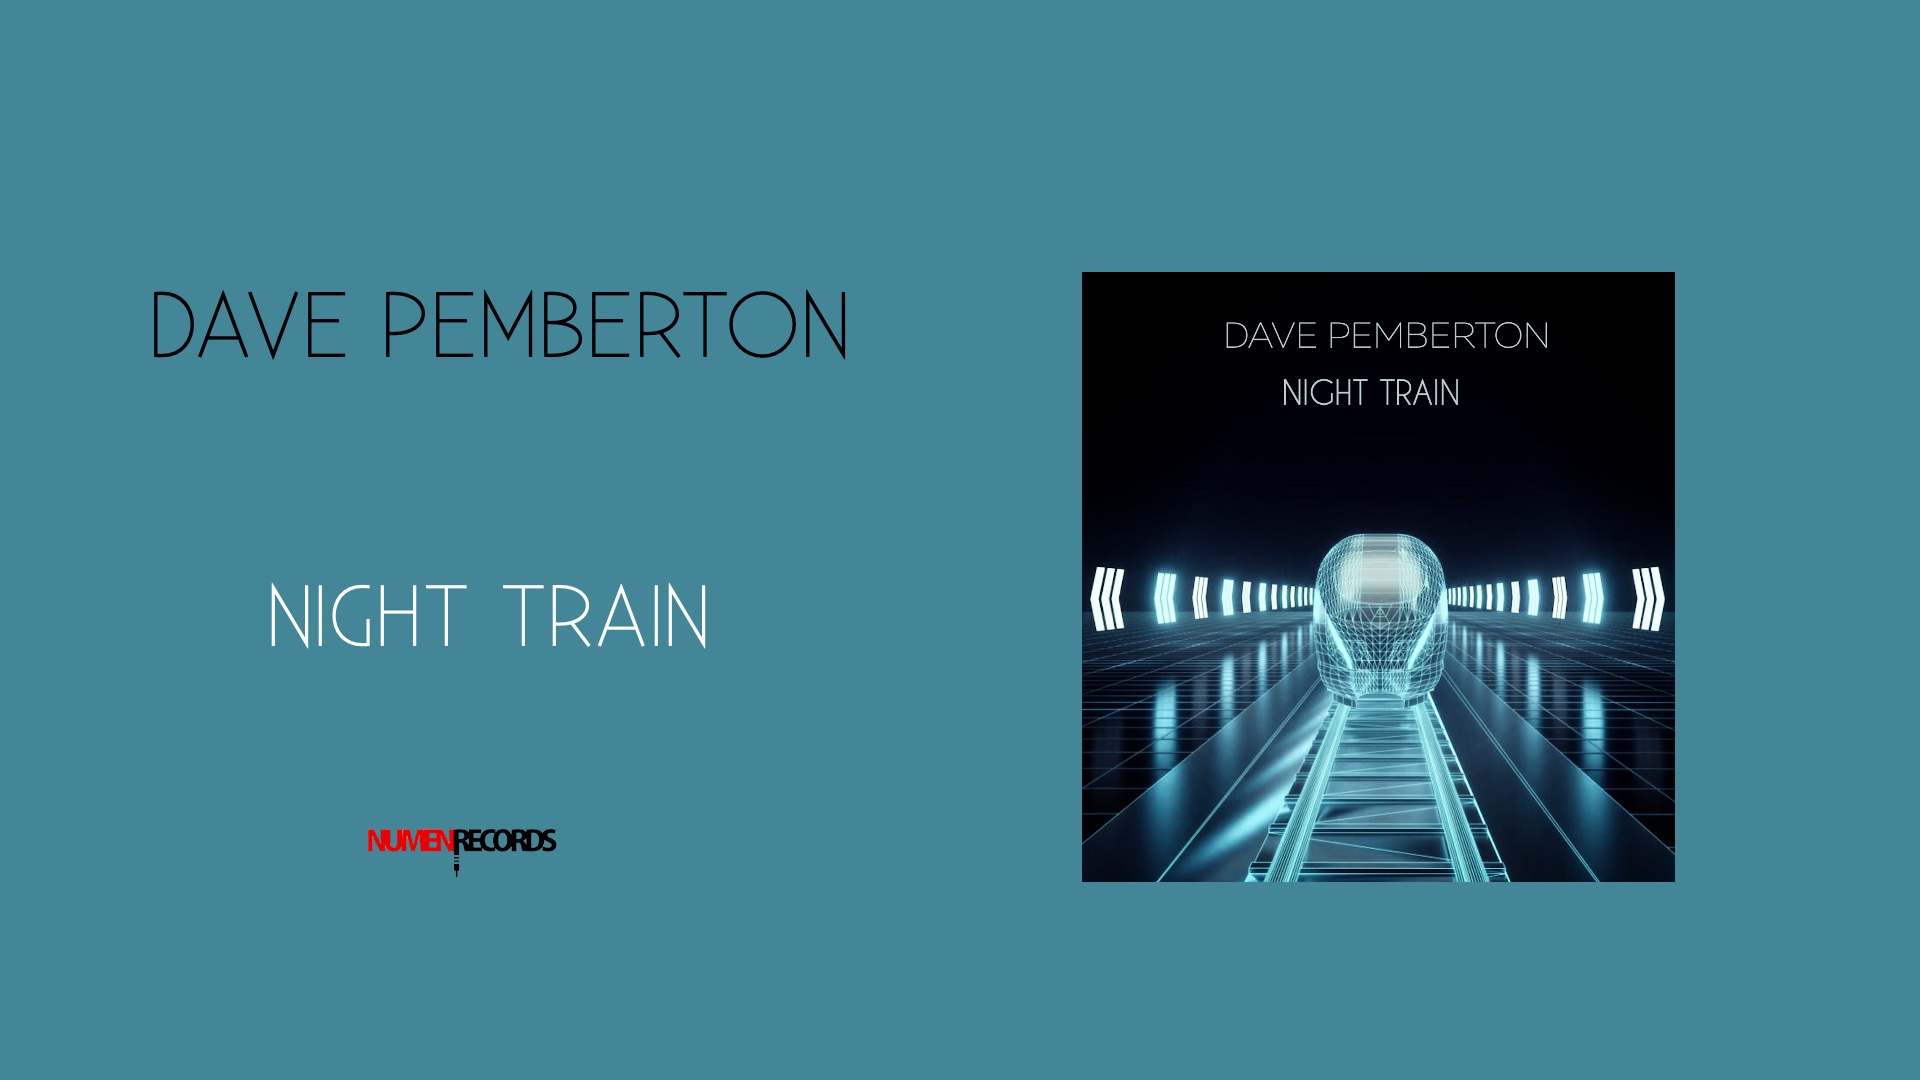 NIGHT TRAIN - Dave Pemberton